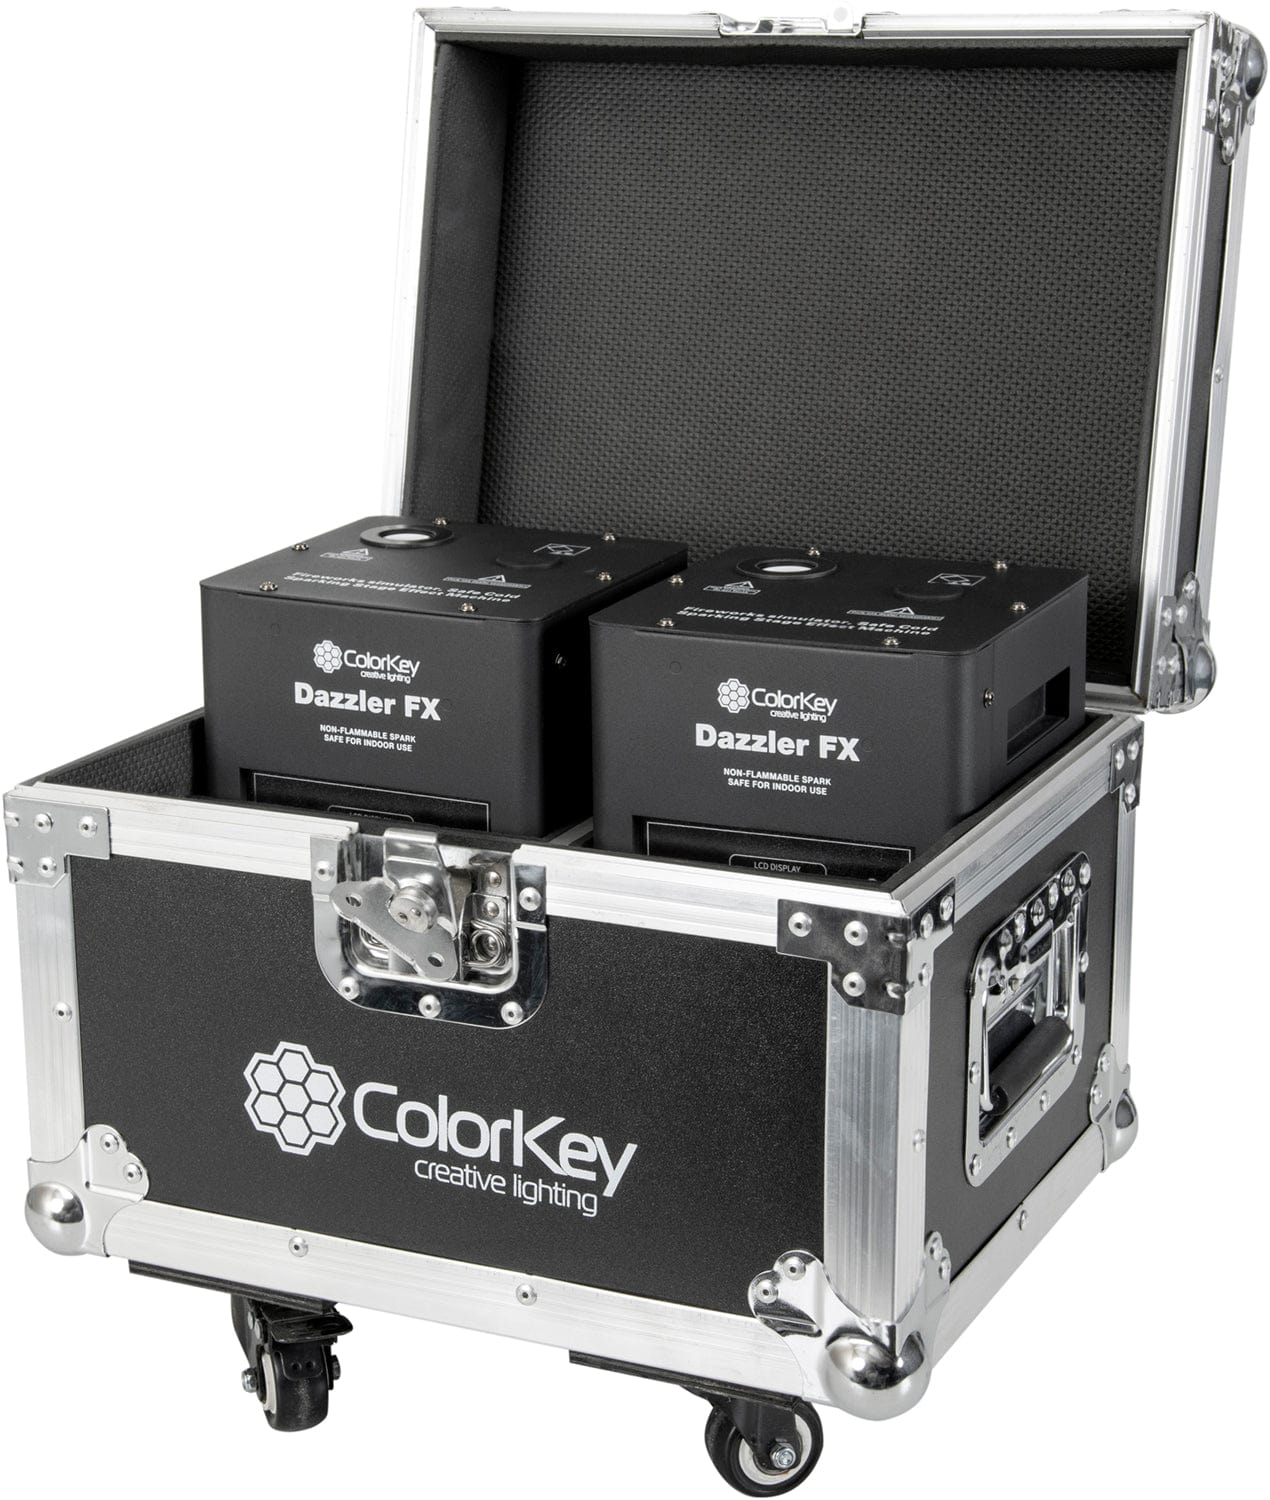 ColorKey Dazzler FX Cold Spark Powder - PSSL ProSound and Stage Lighting